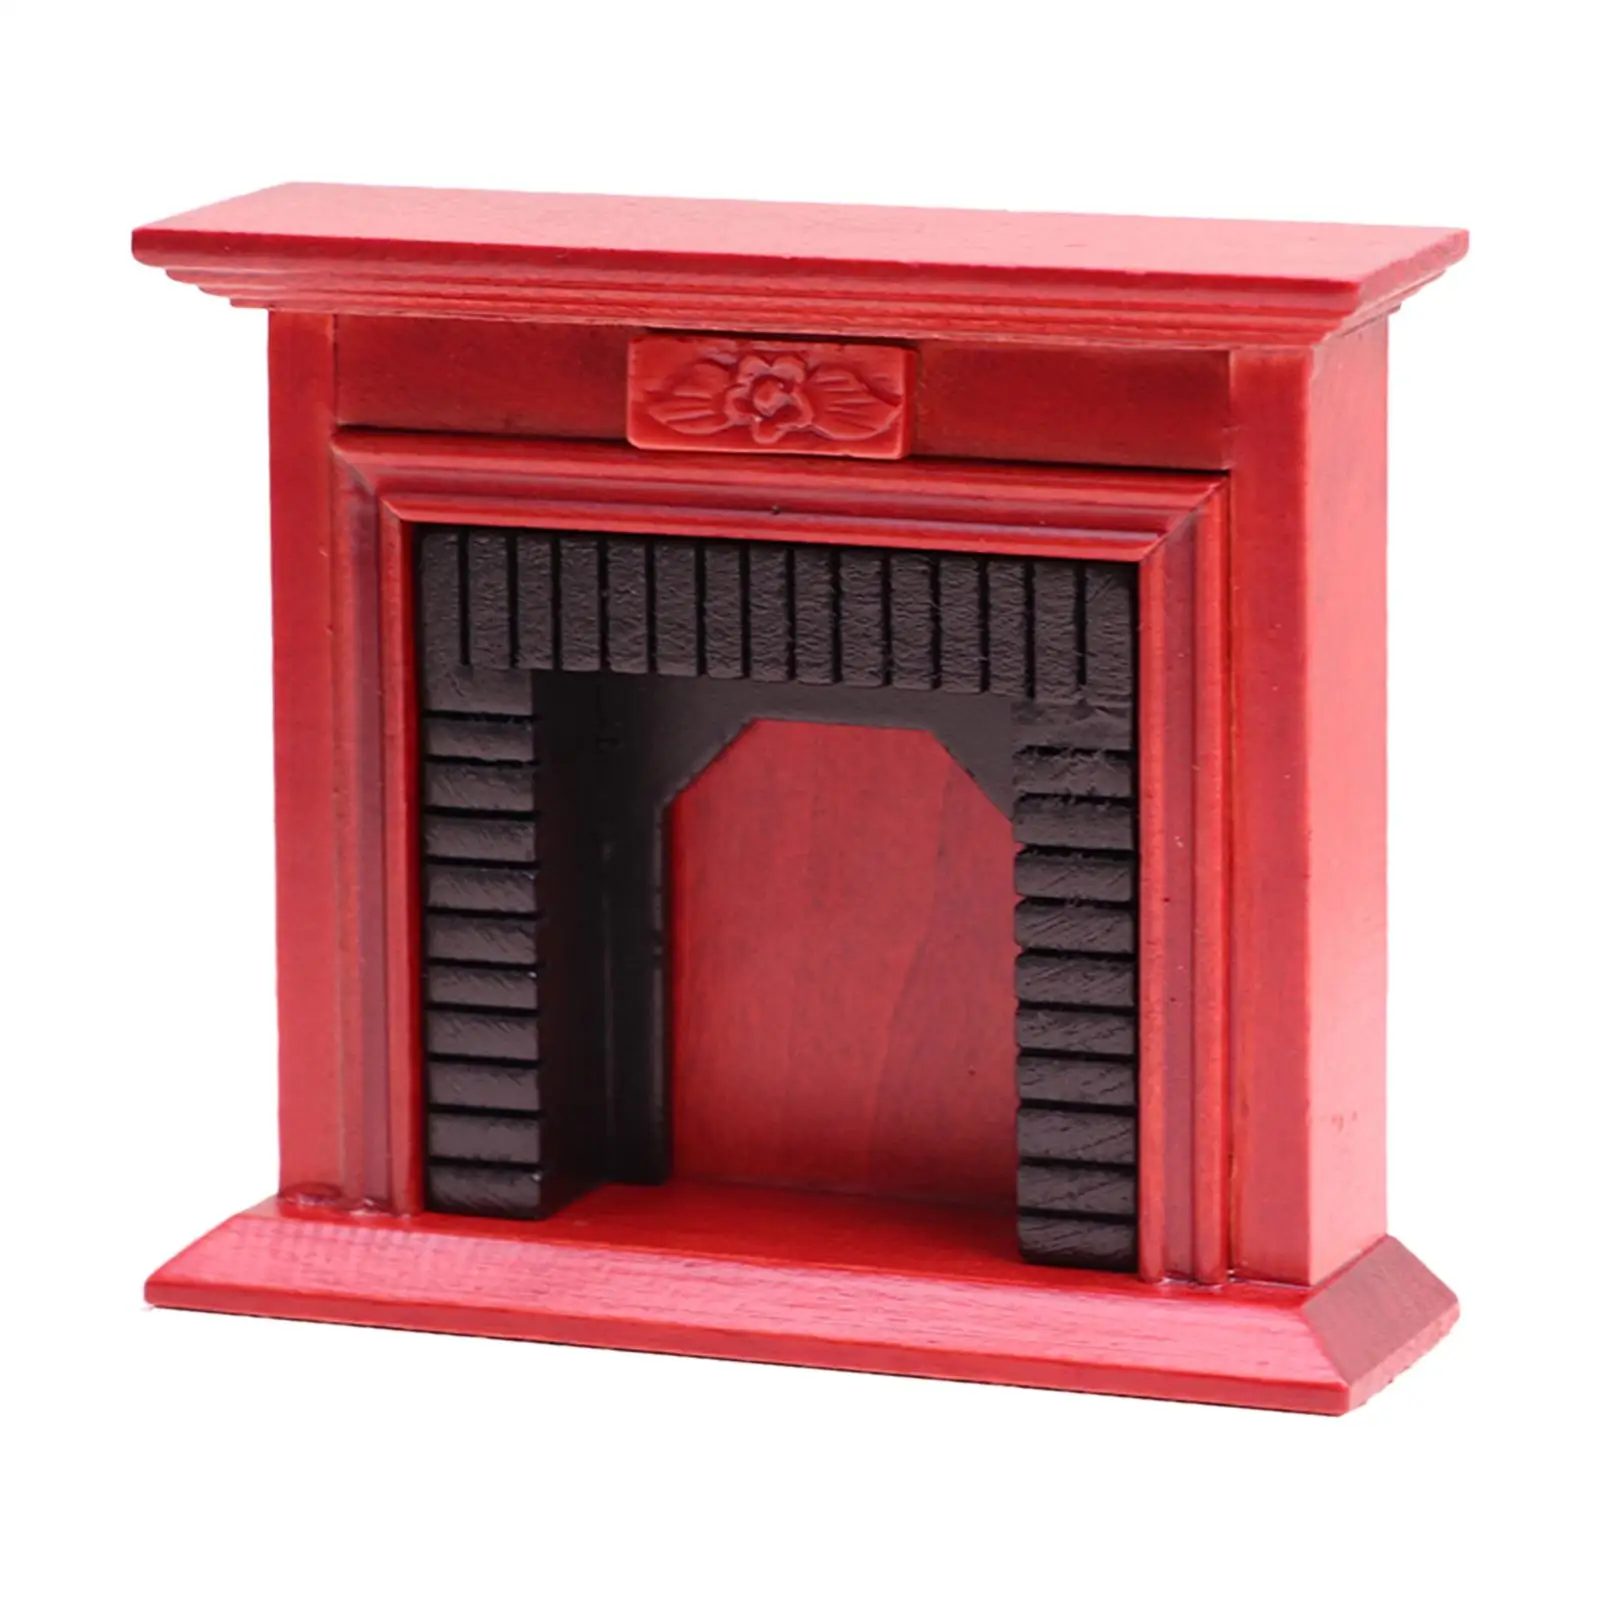 Dollhouse Fireplace Miniature Miniature Dollhouse Decoration Accessories Toy